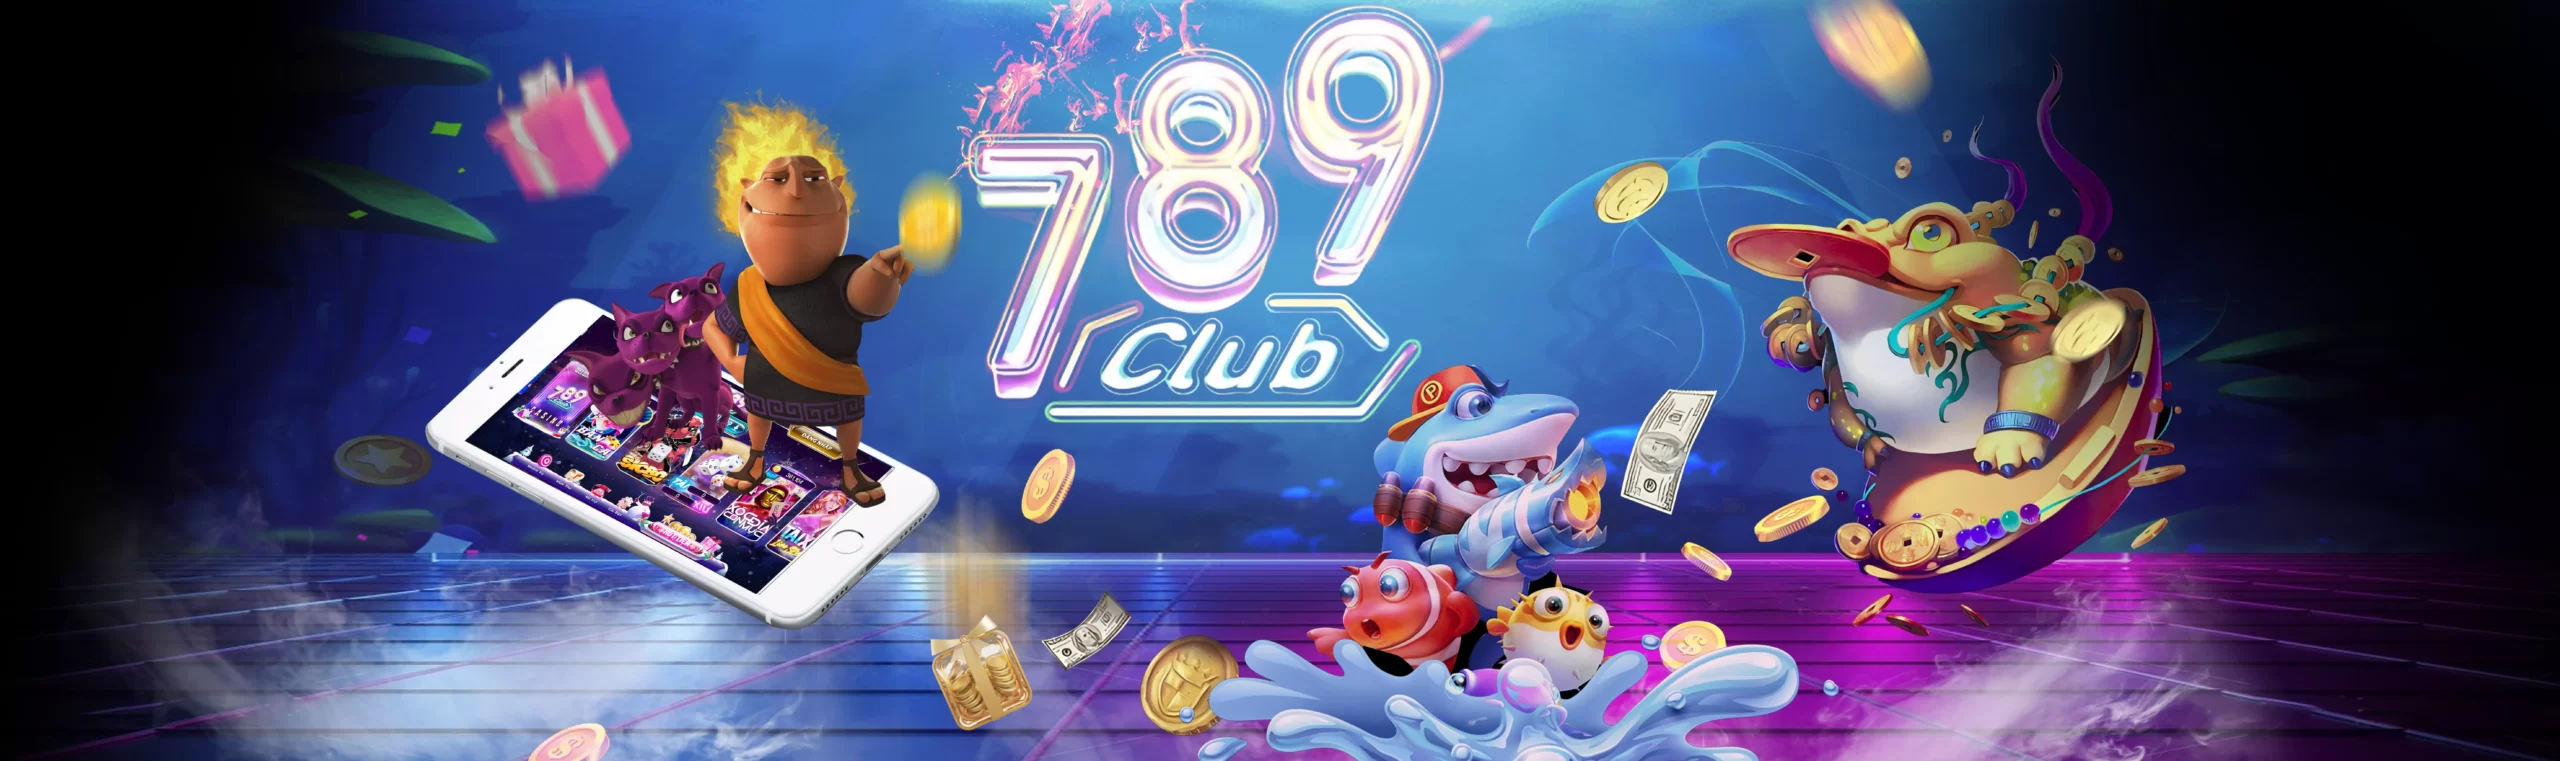 789club banner